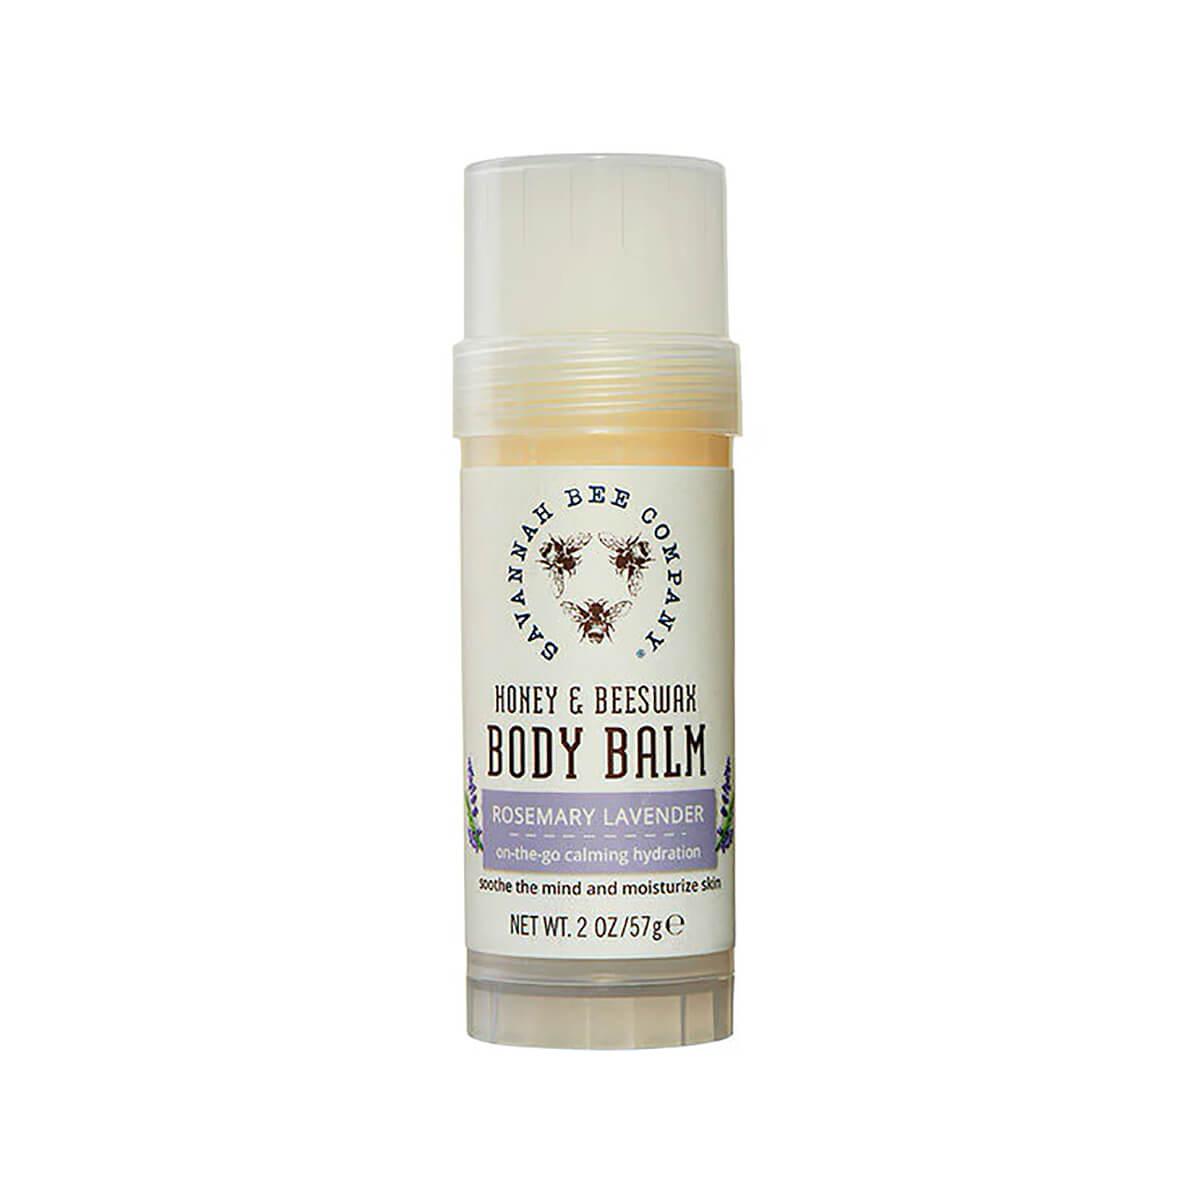  Honey & Beeswax Body Balm - Rosemary Lavender